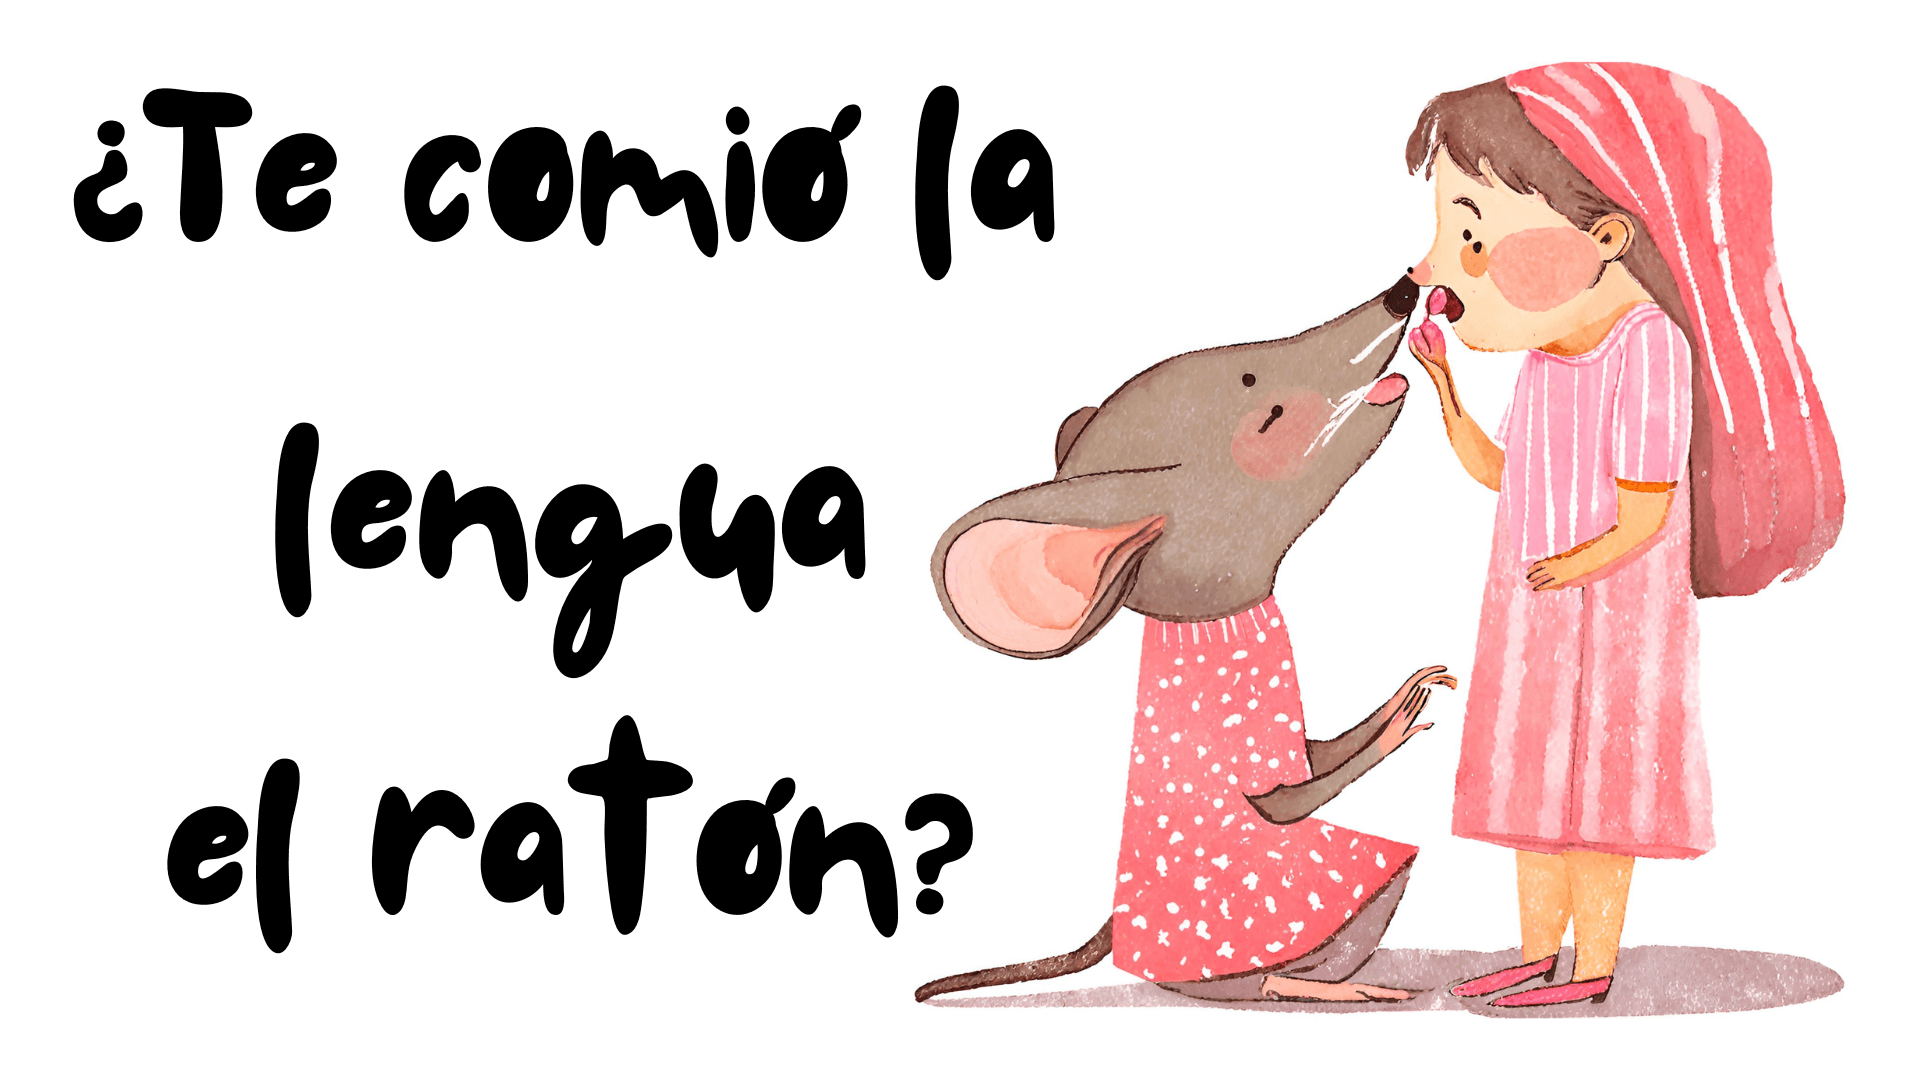 Spanish idiom on mice